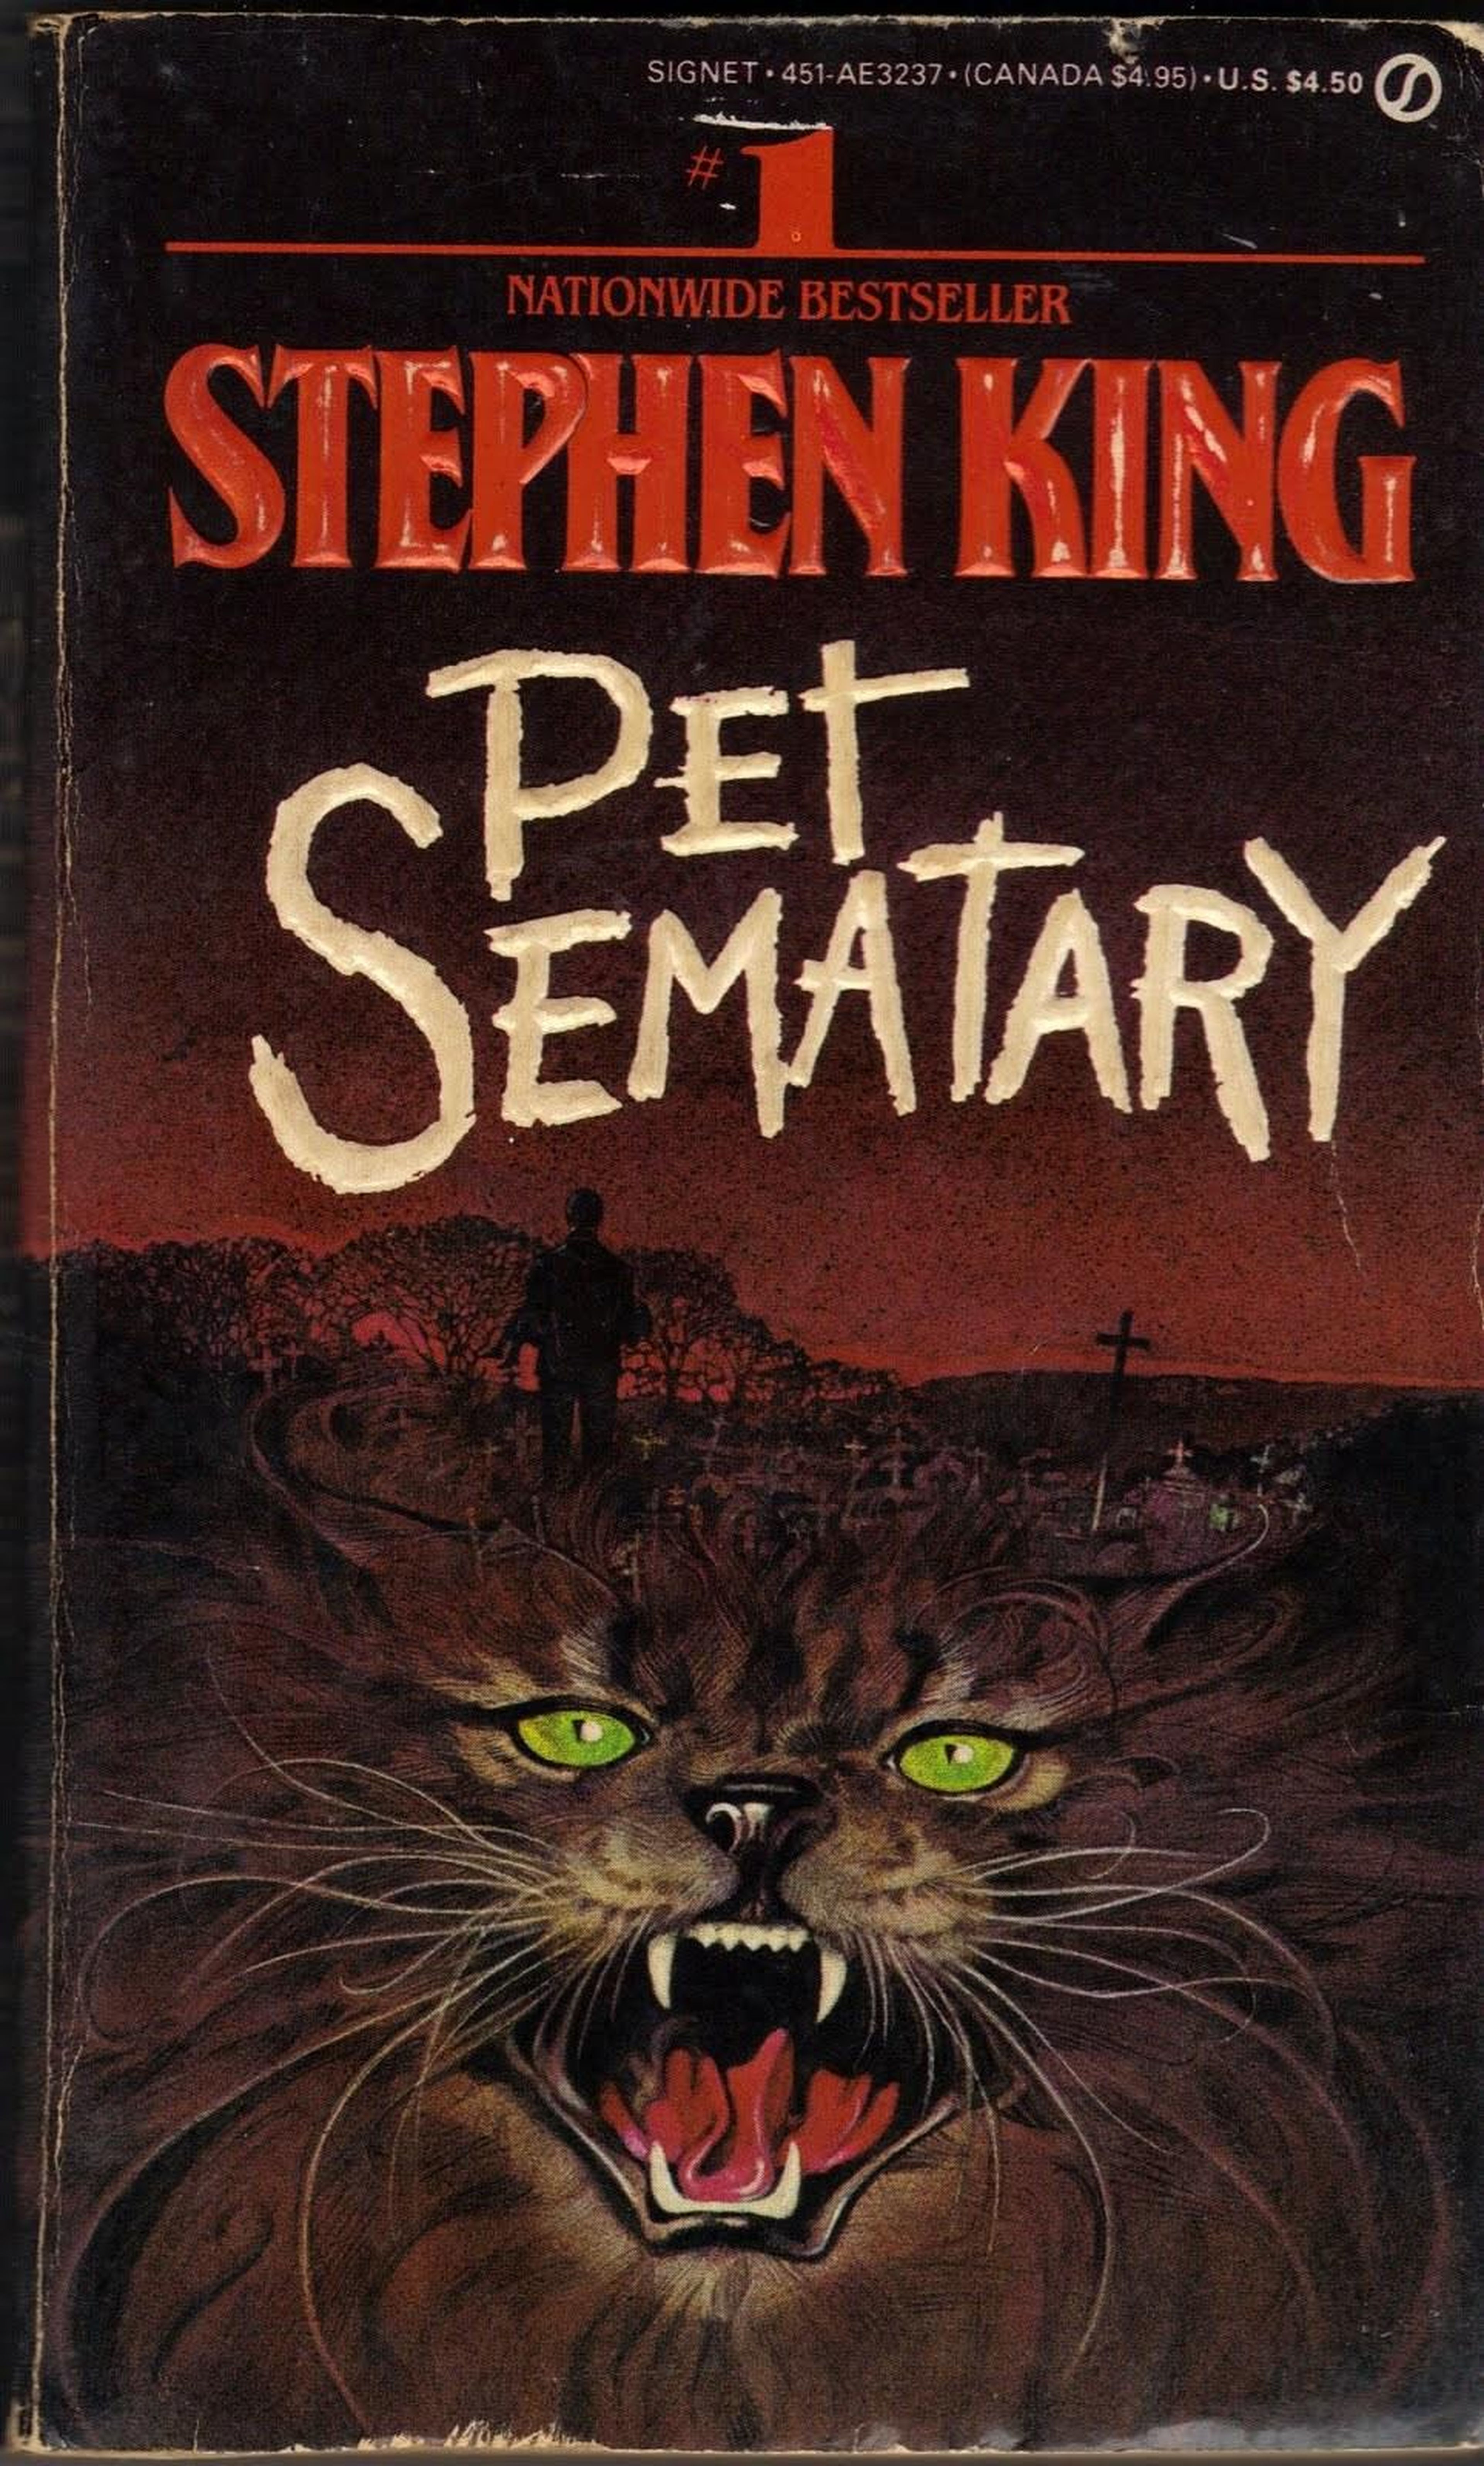 "Pet Sematary."